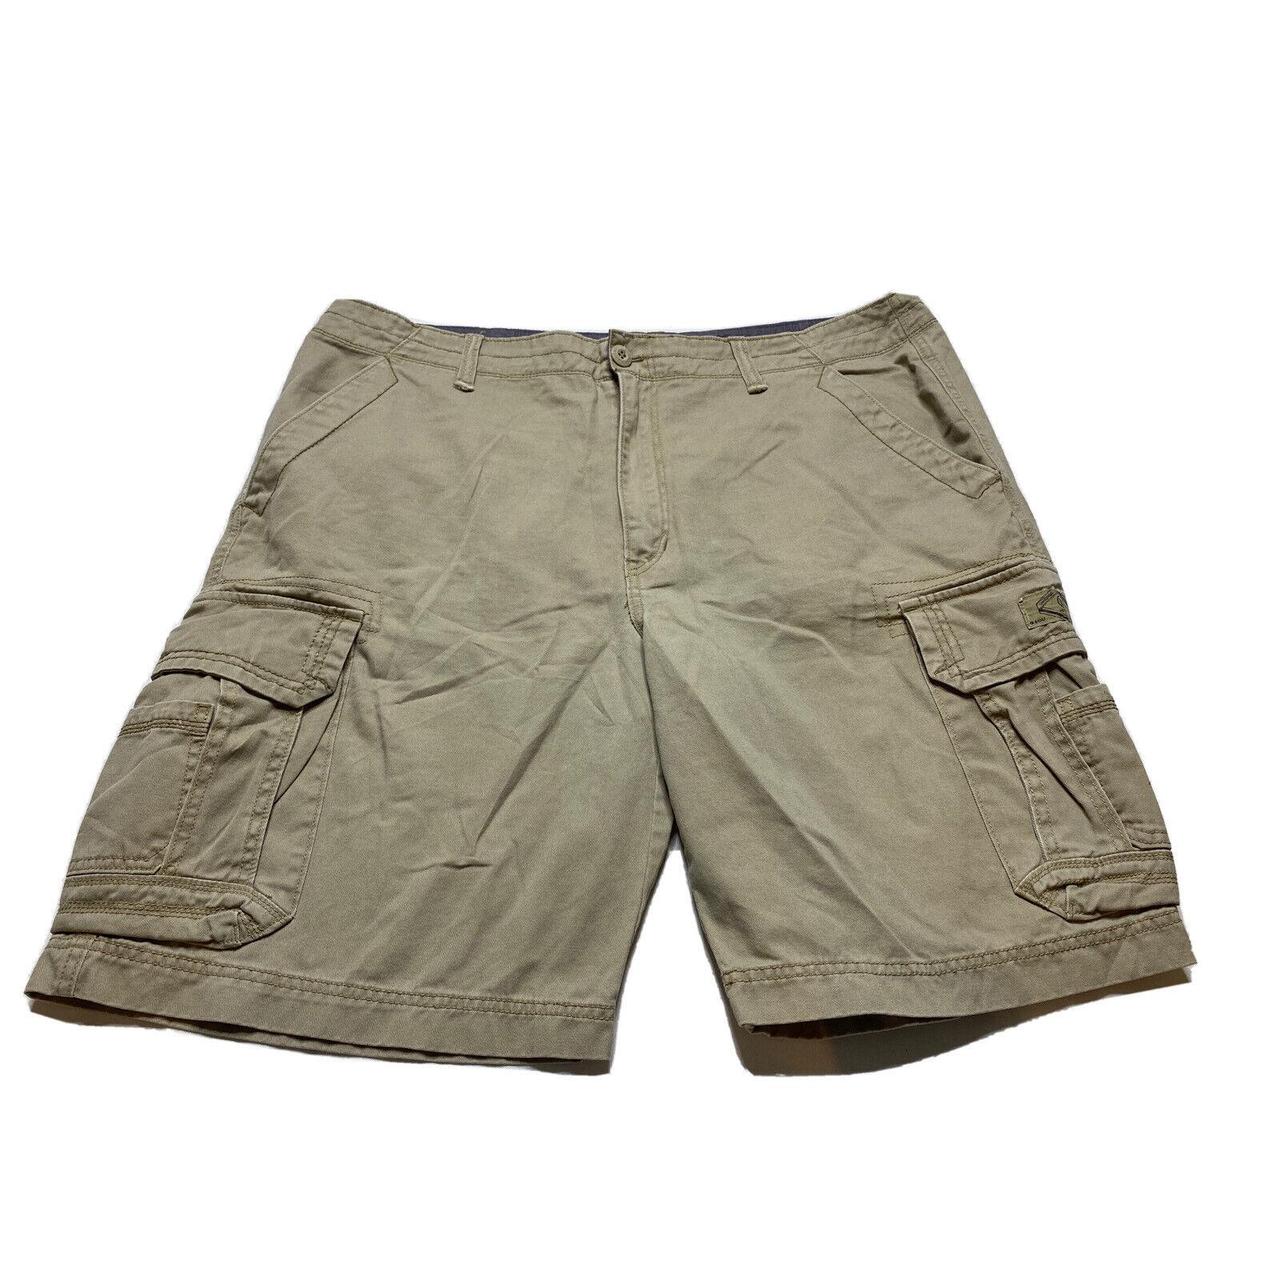 Union Bay Men's Shorts